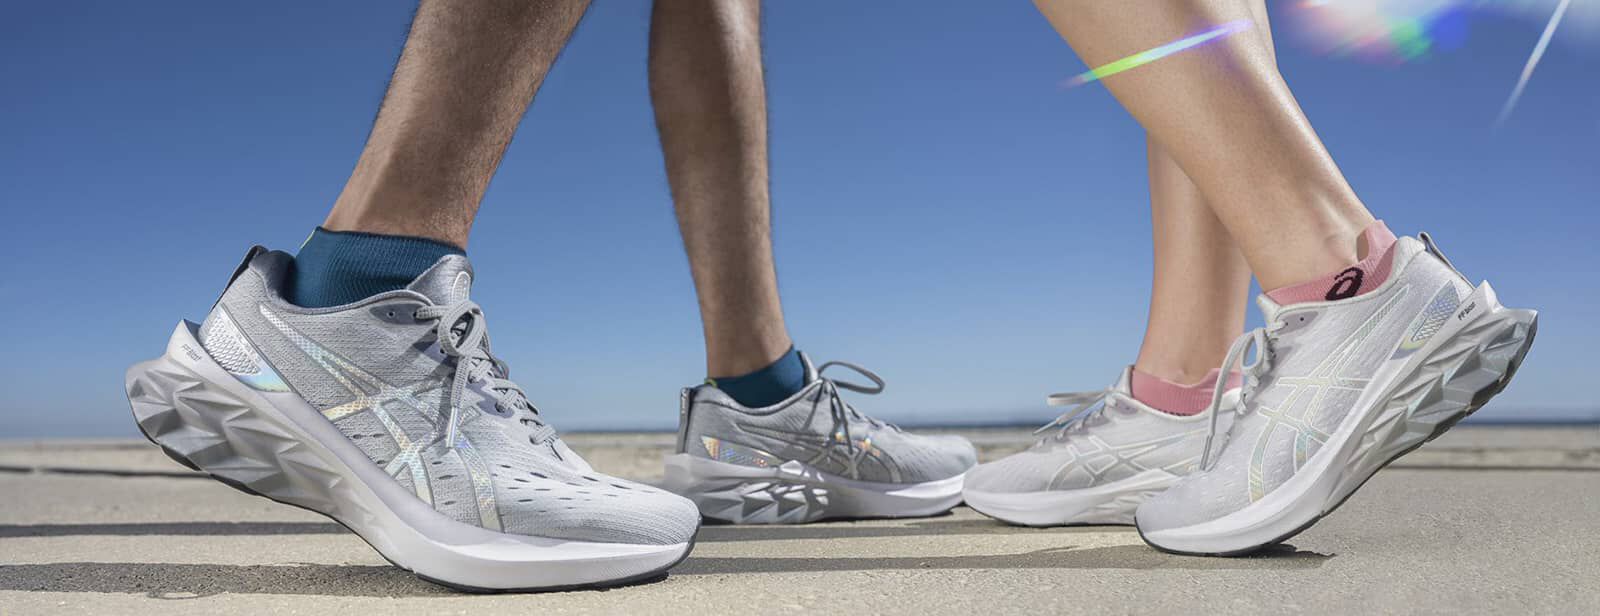 Laufschuhe saubermachen | Tipps für saubere Laufschuhe | ASICS